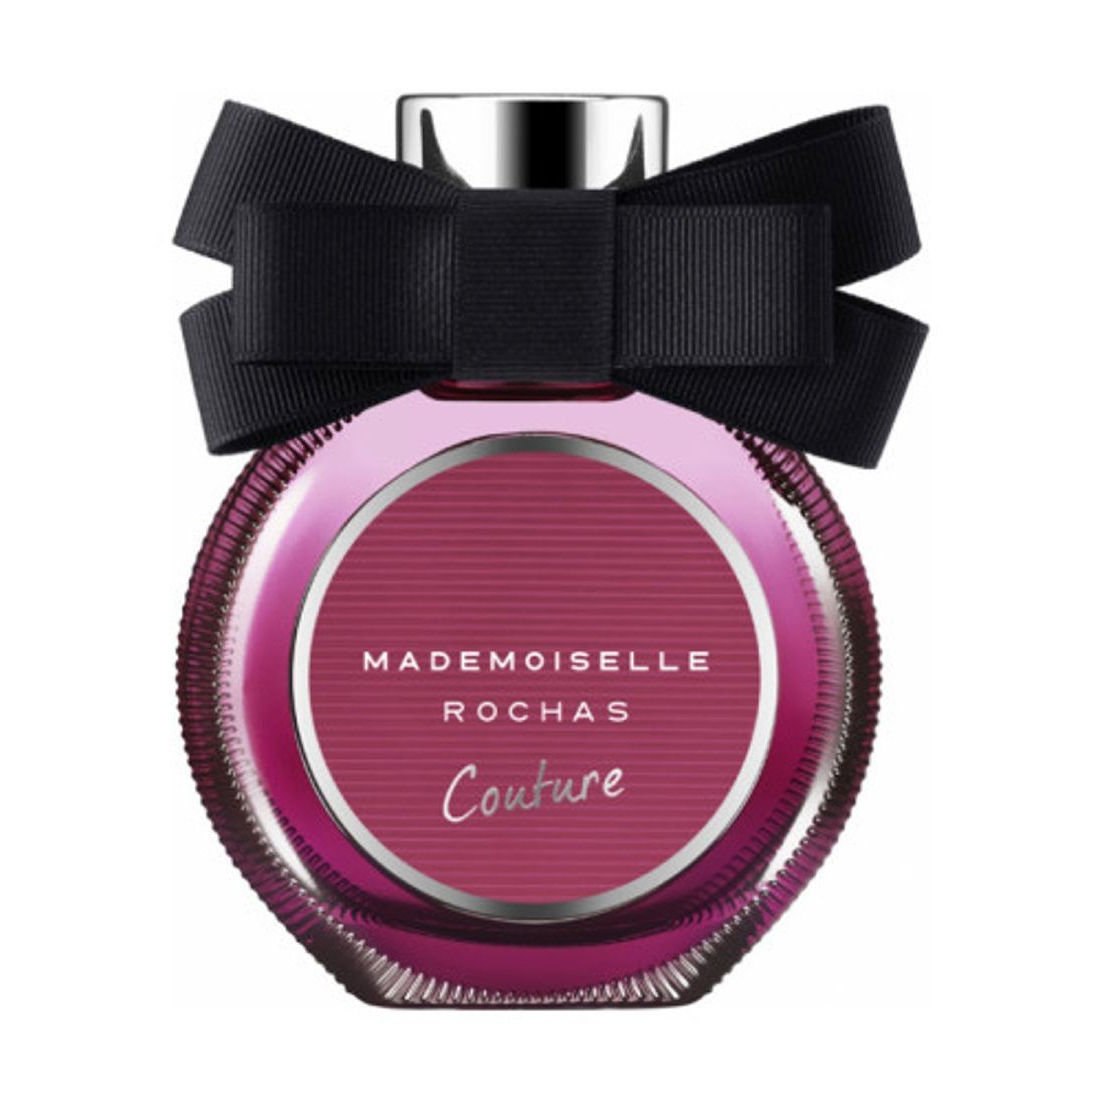 Rochas Mademoiselle Rochas Couture Eau de parfum spray 50 ml